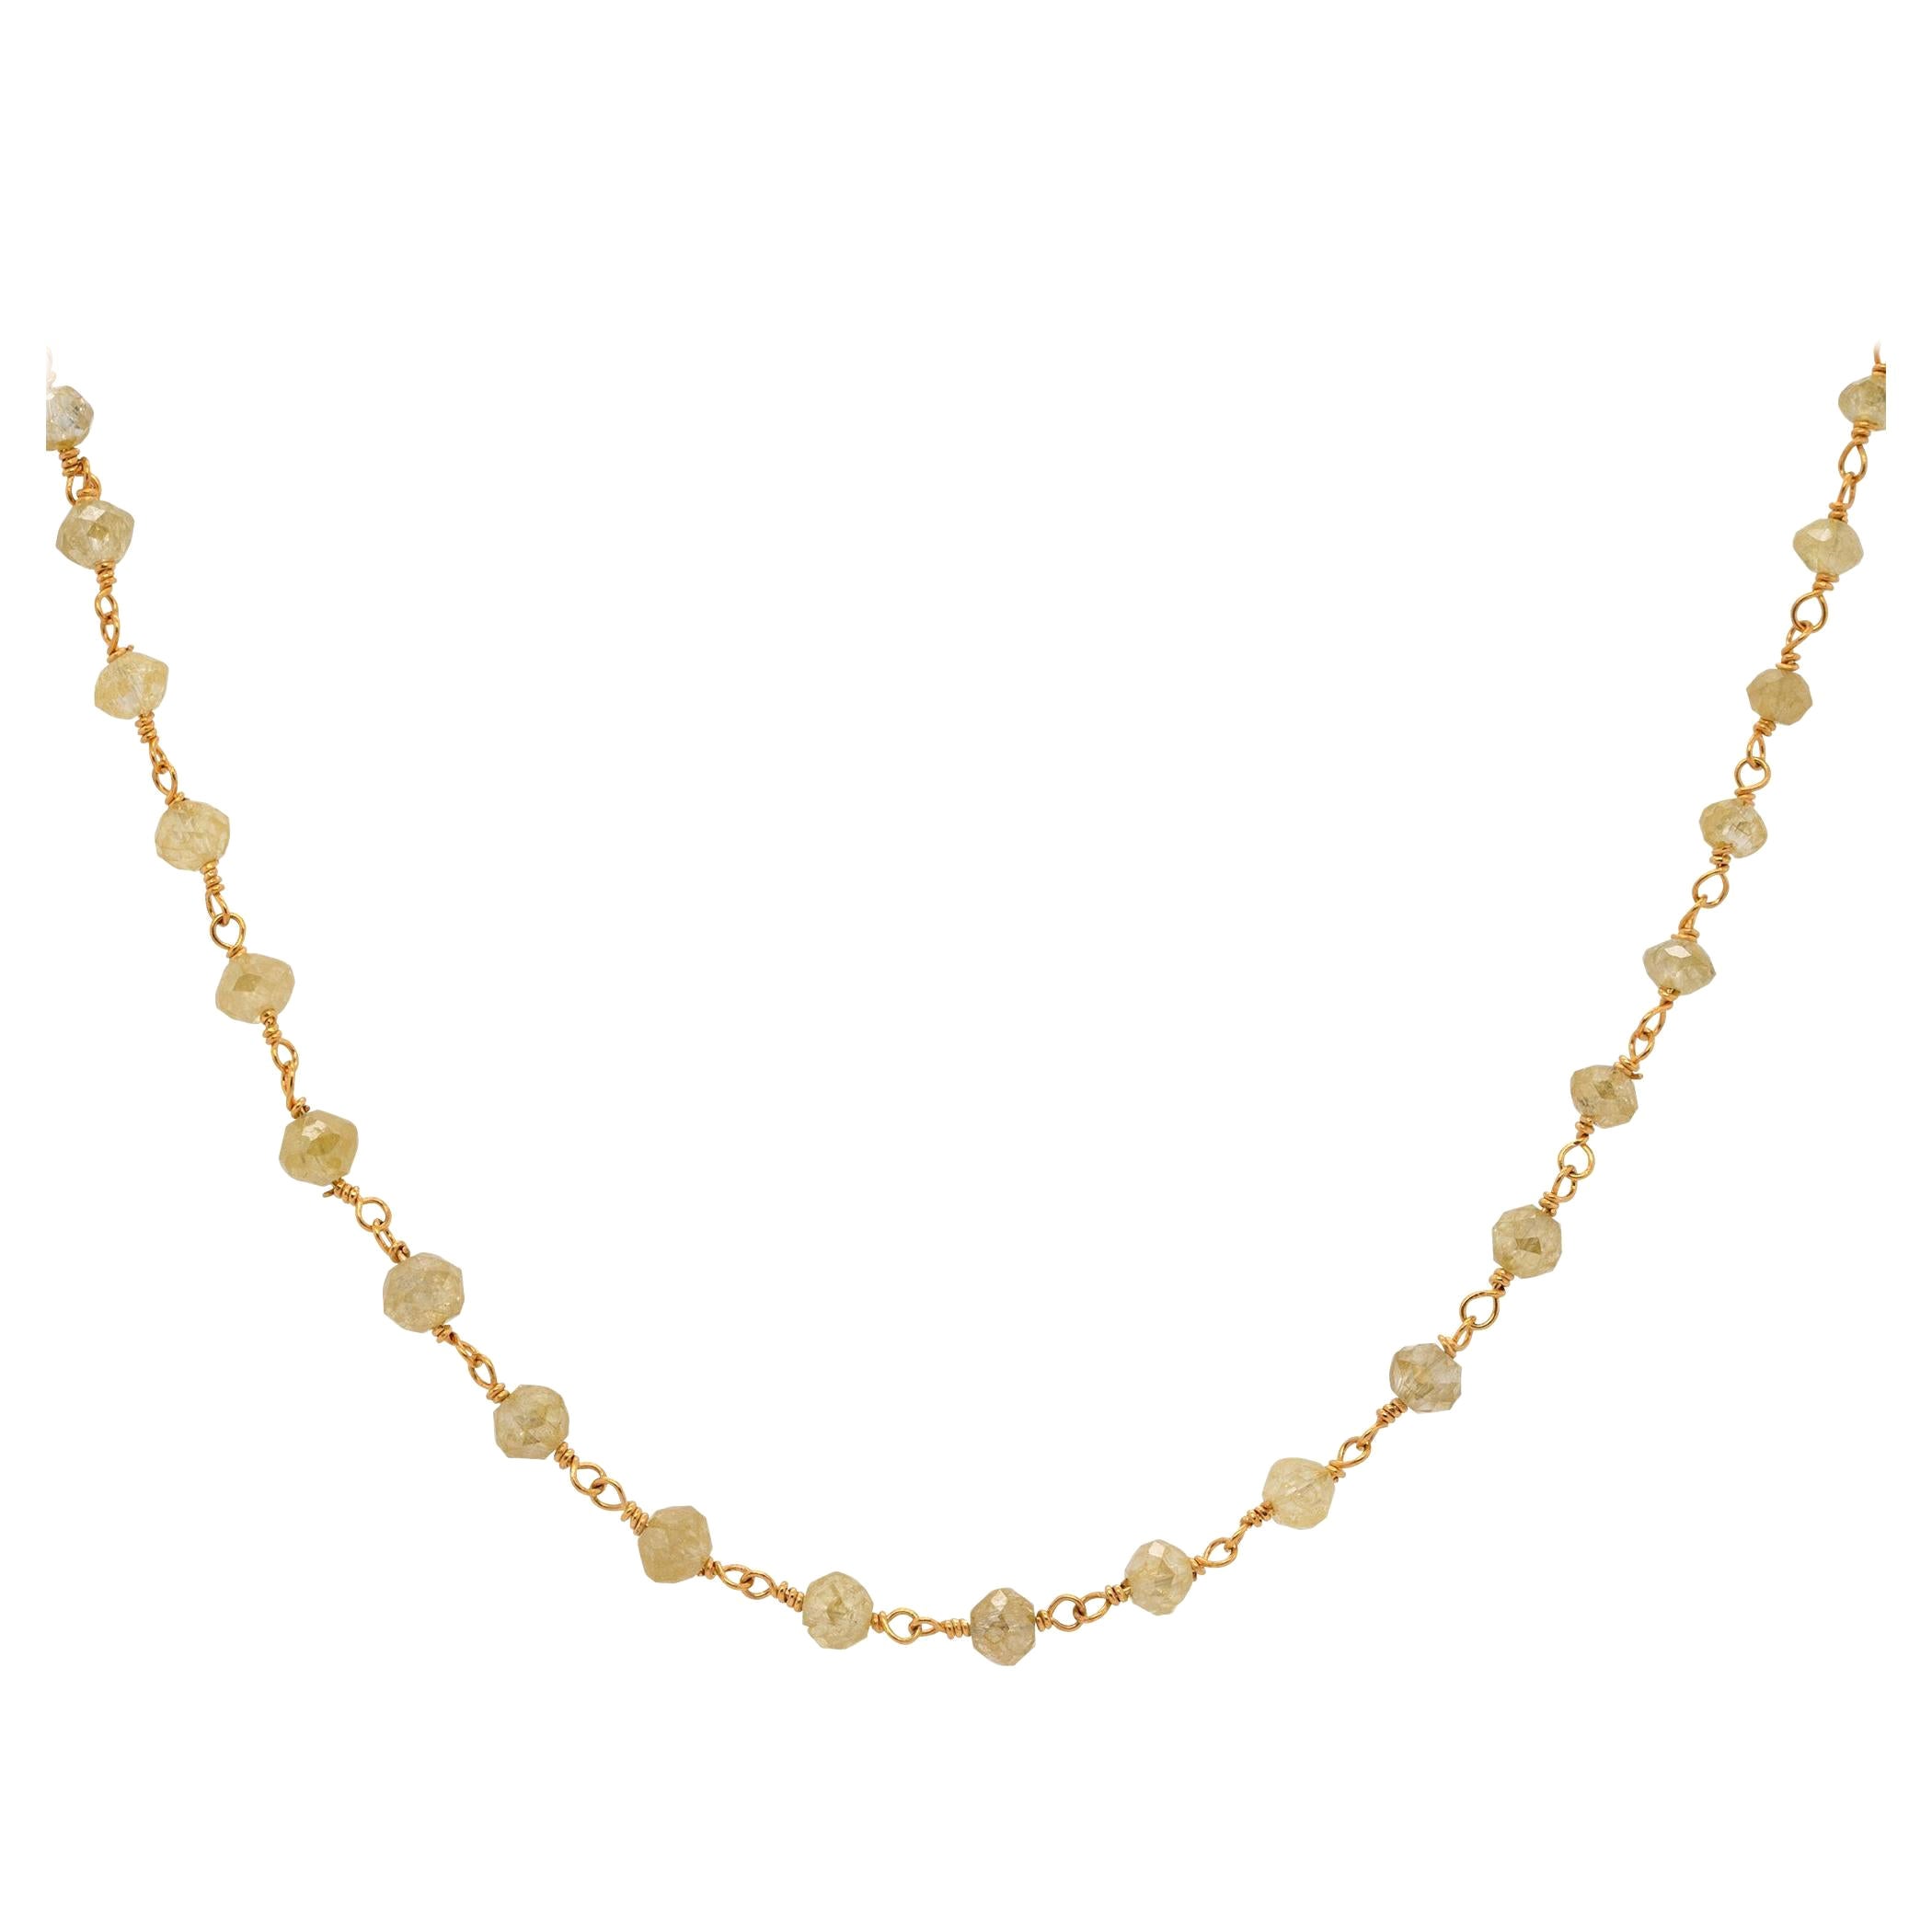 7 Carat Rustic Yellow Faceted Diamond Bead Necklace 14 Karat in Stock